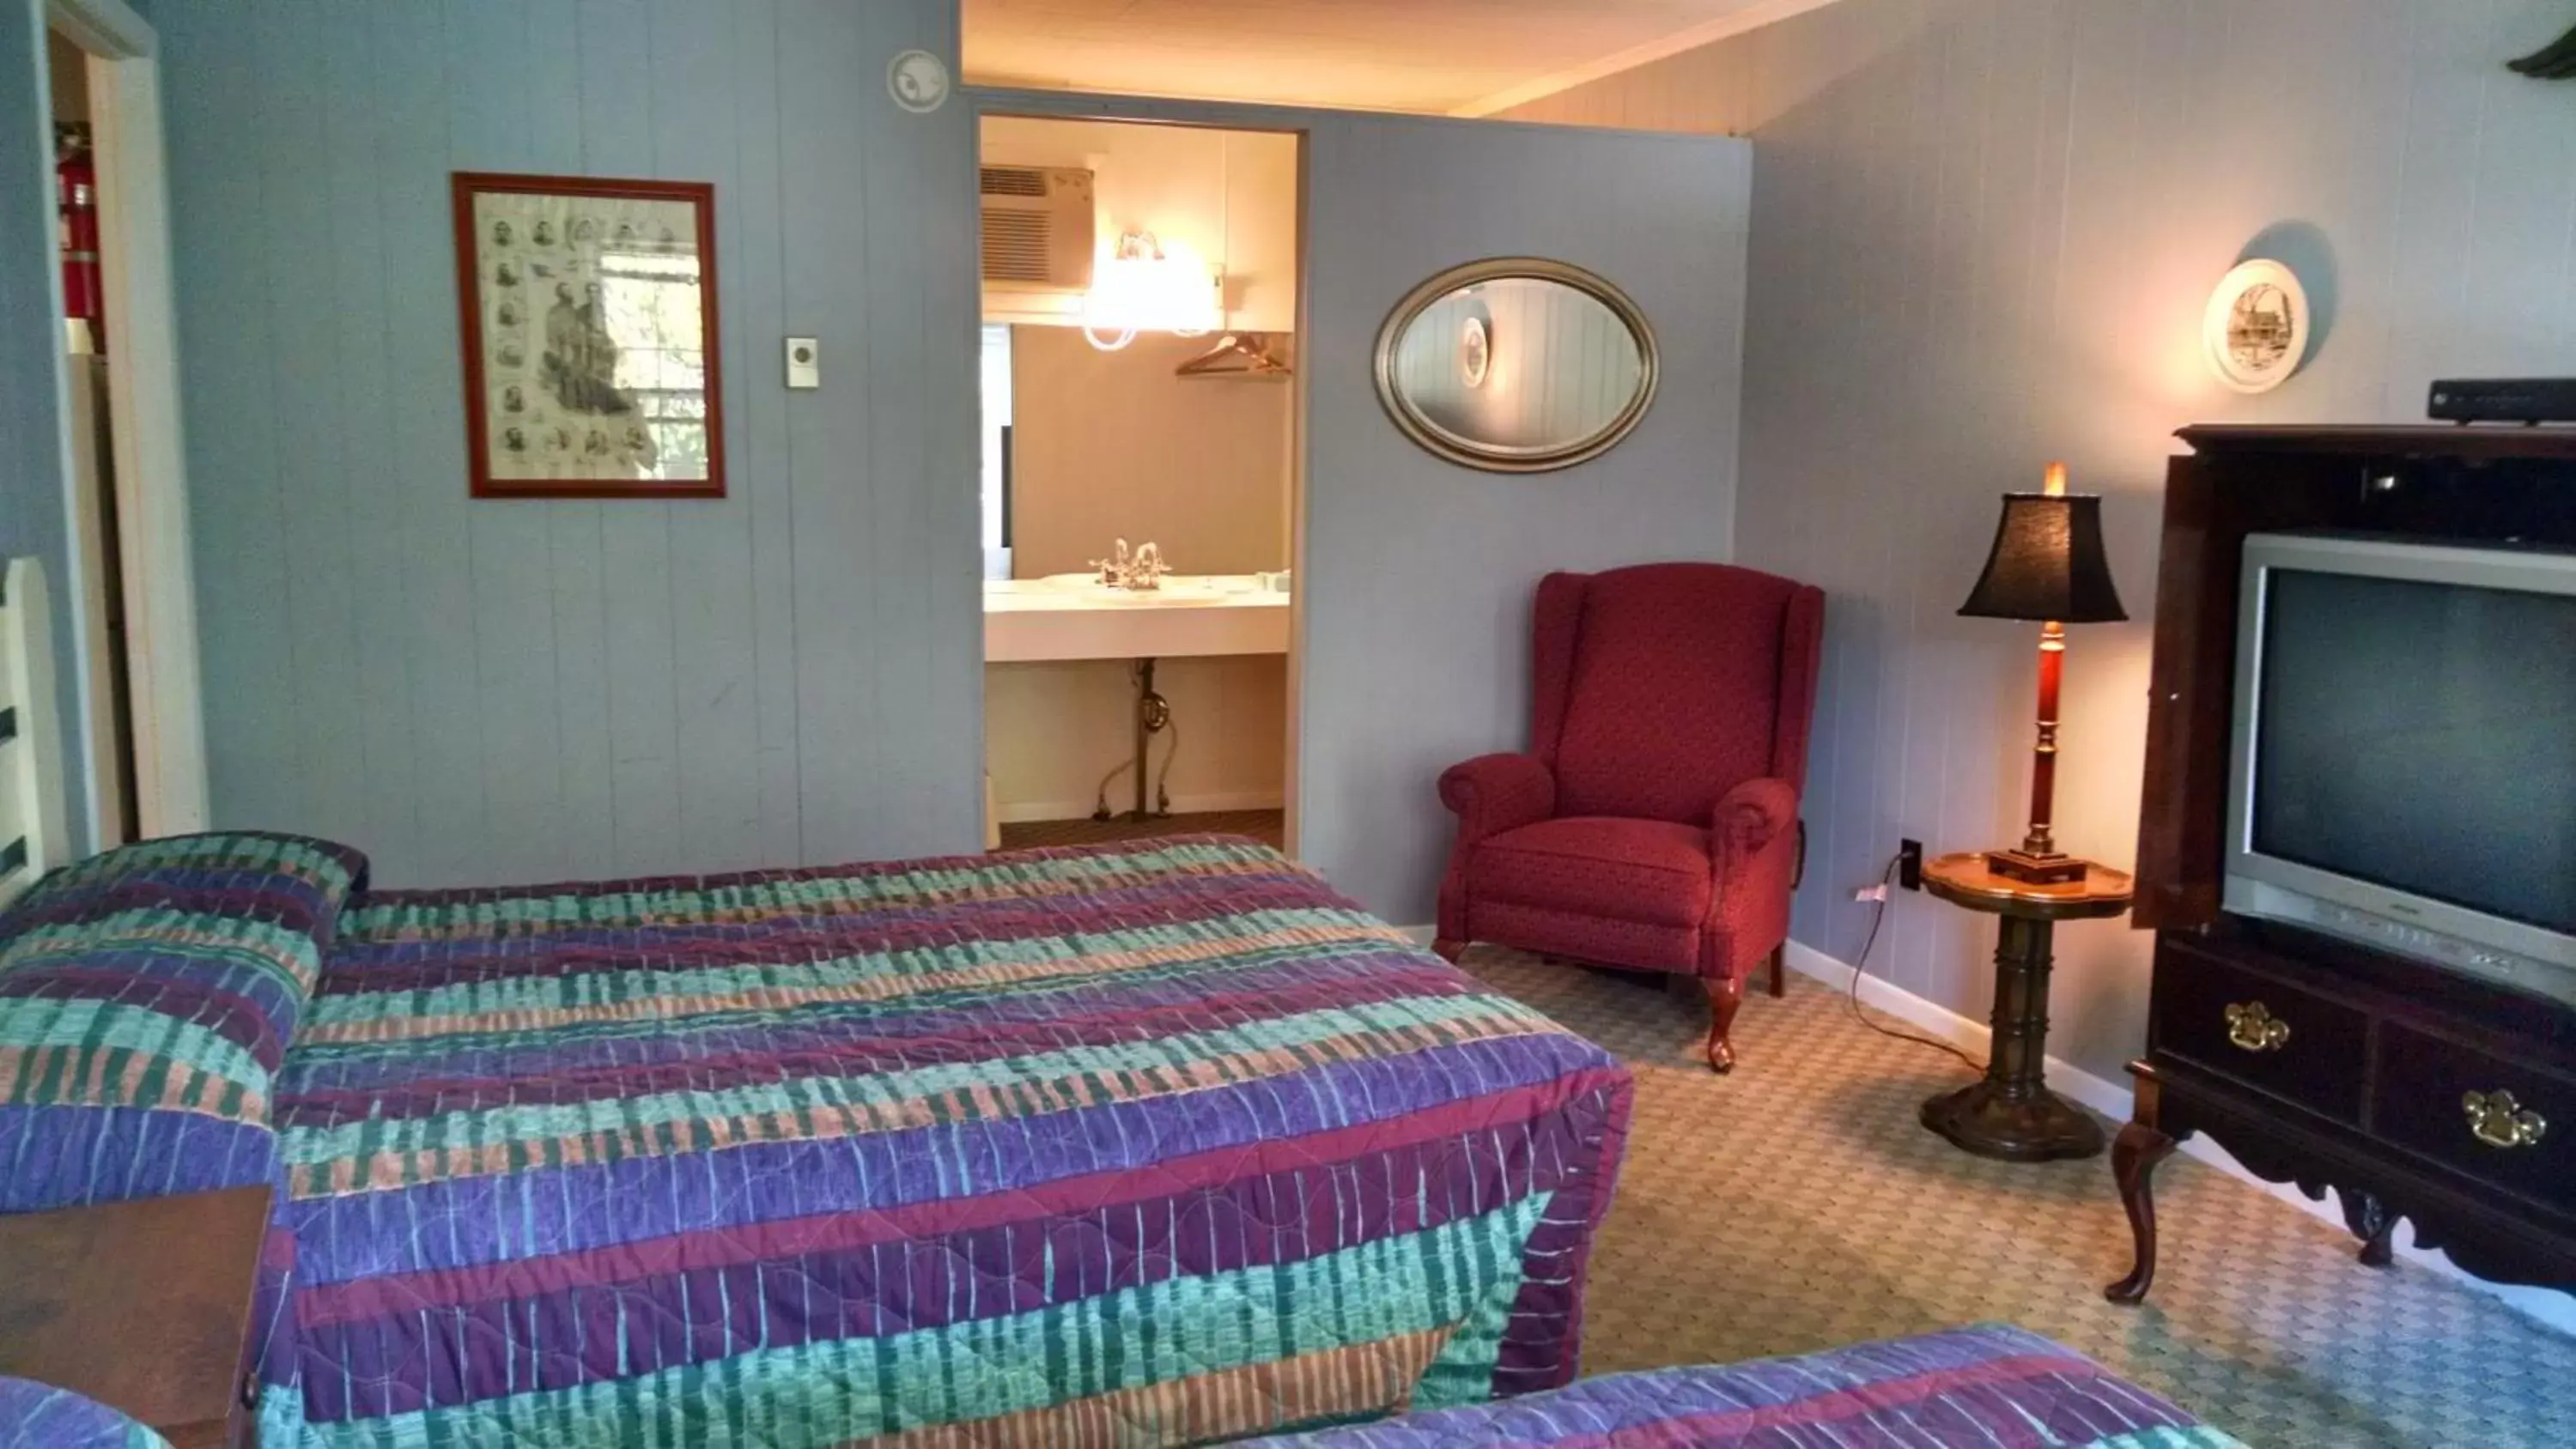 TV and multimedia, Room Photo in Roseloe Motel